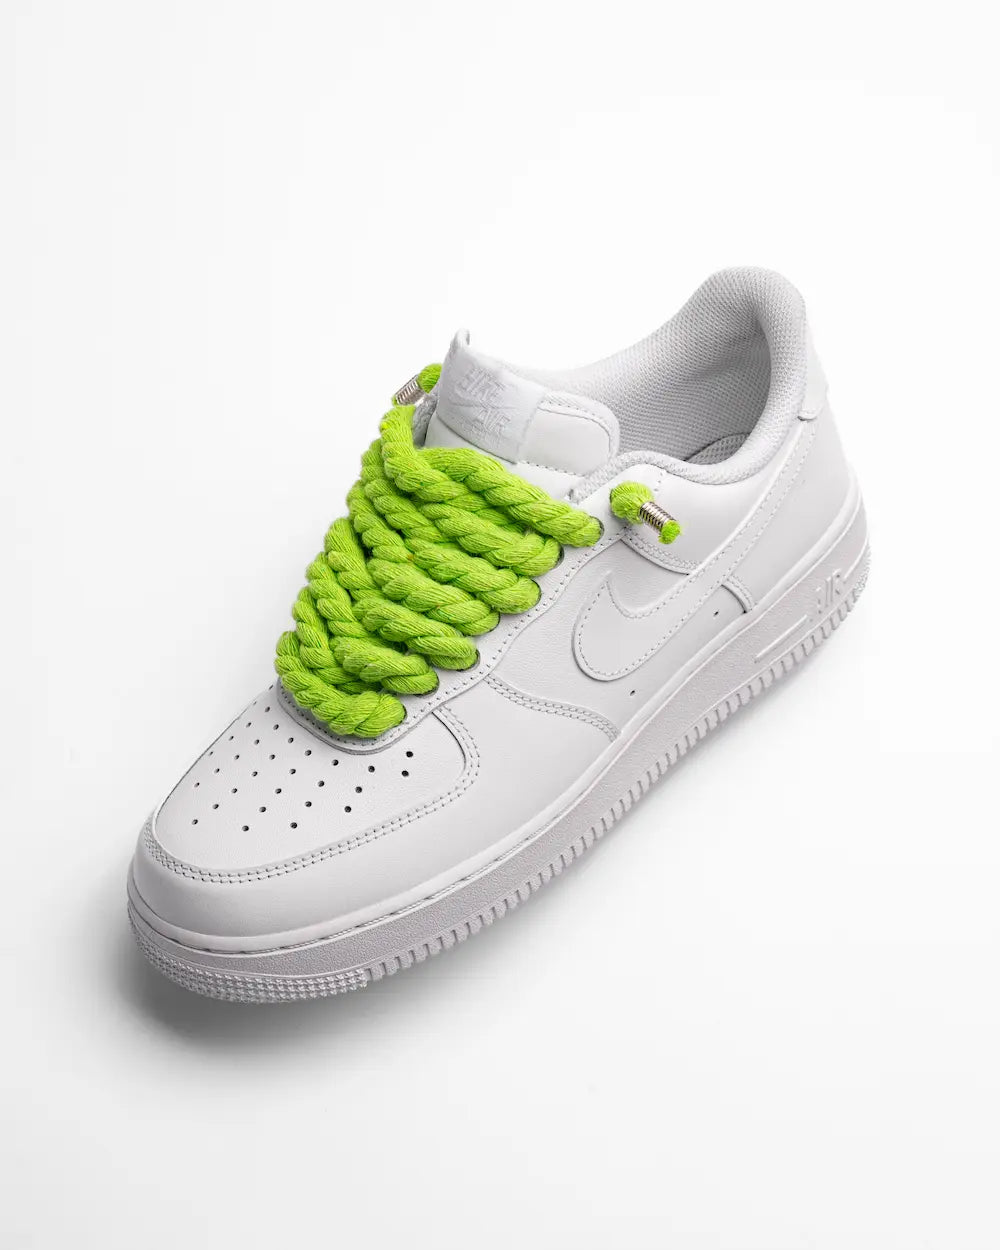 Nike Air Force 1 bianca personalizzata con lacci in corda verde lime